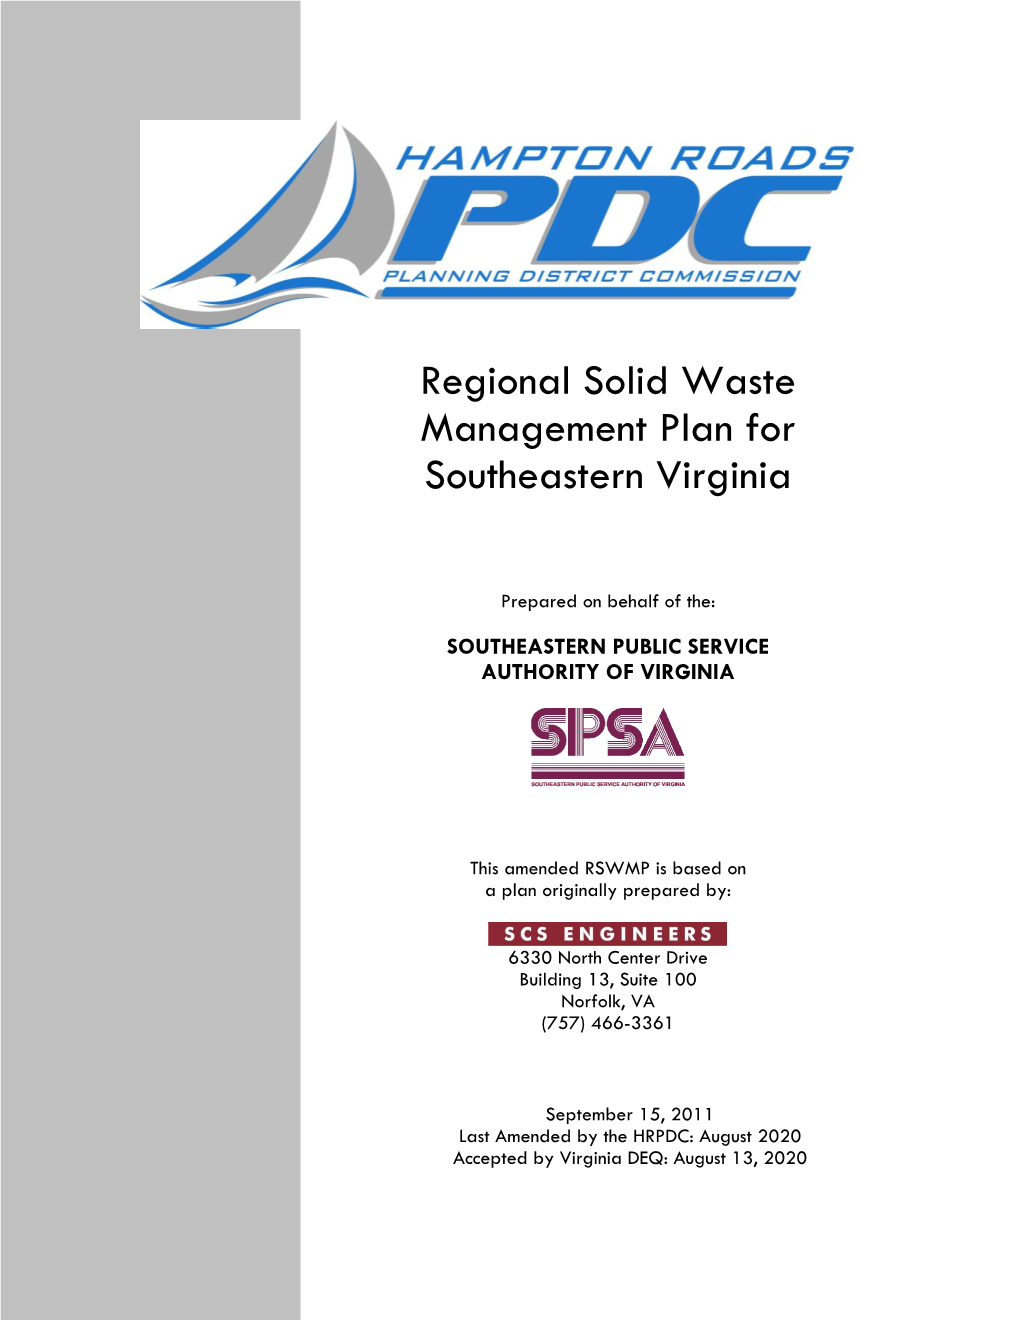 Regional Solid Waste Management Plan for Southeastern Virginia